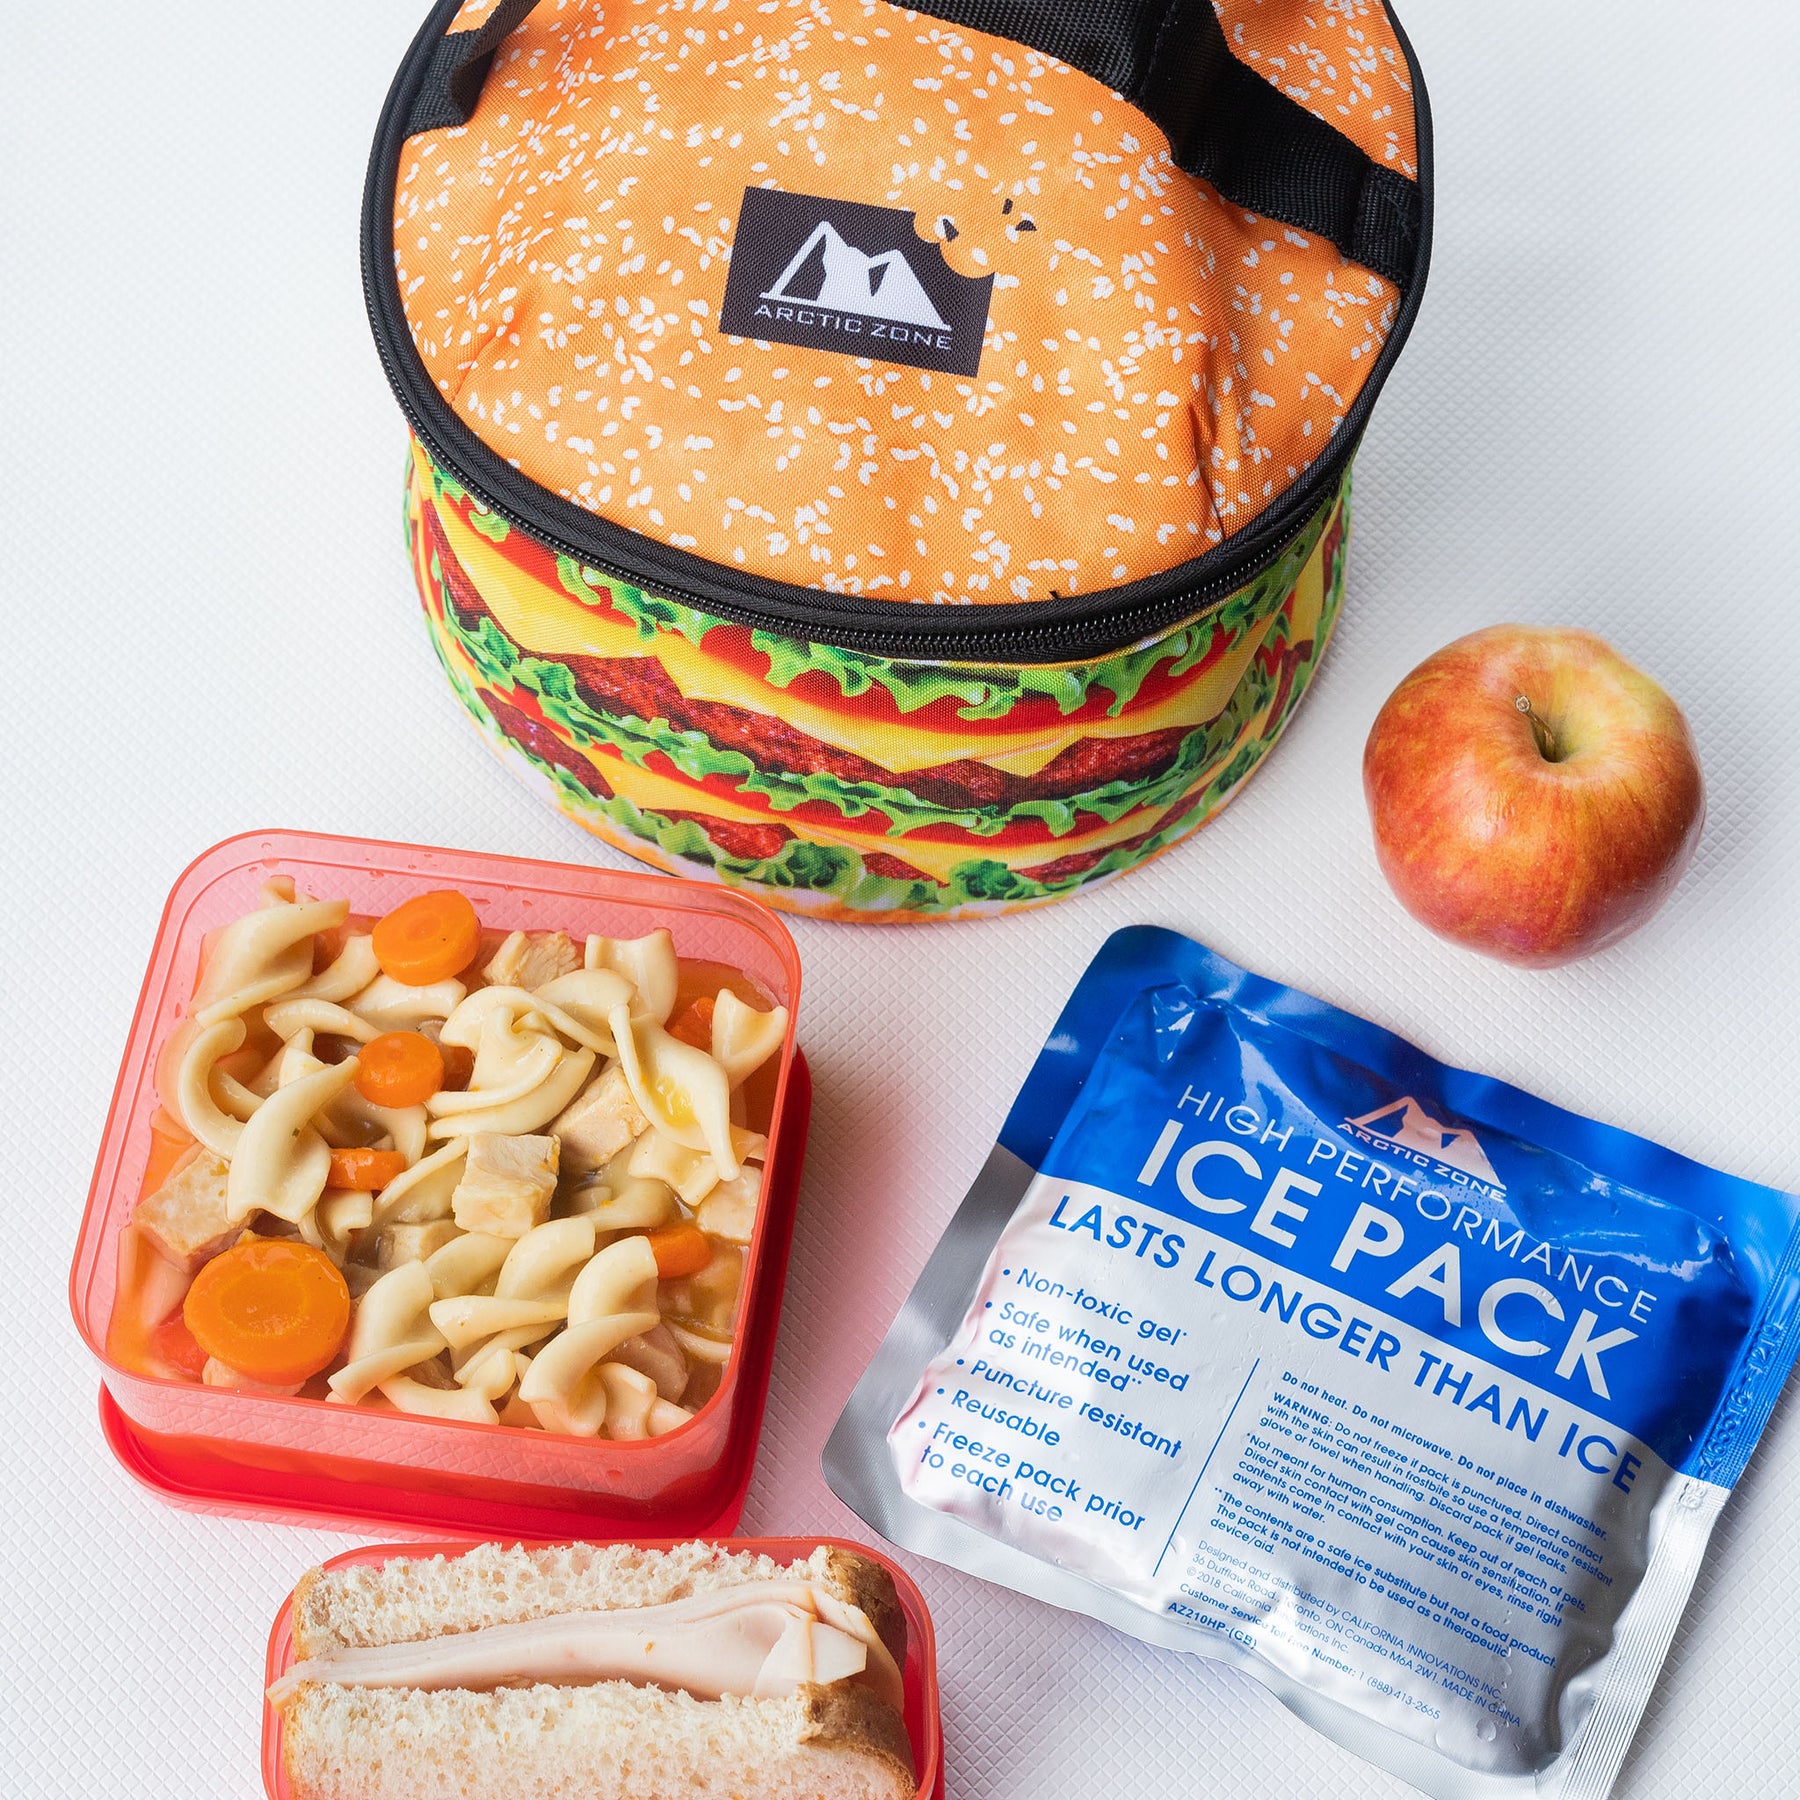 Arctic Zone® Big Burger Lunch Pack | Arctic Zone